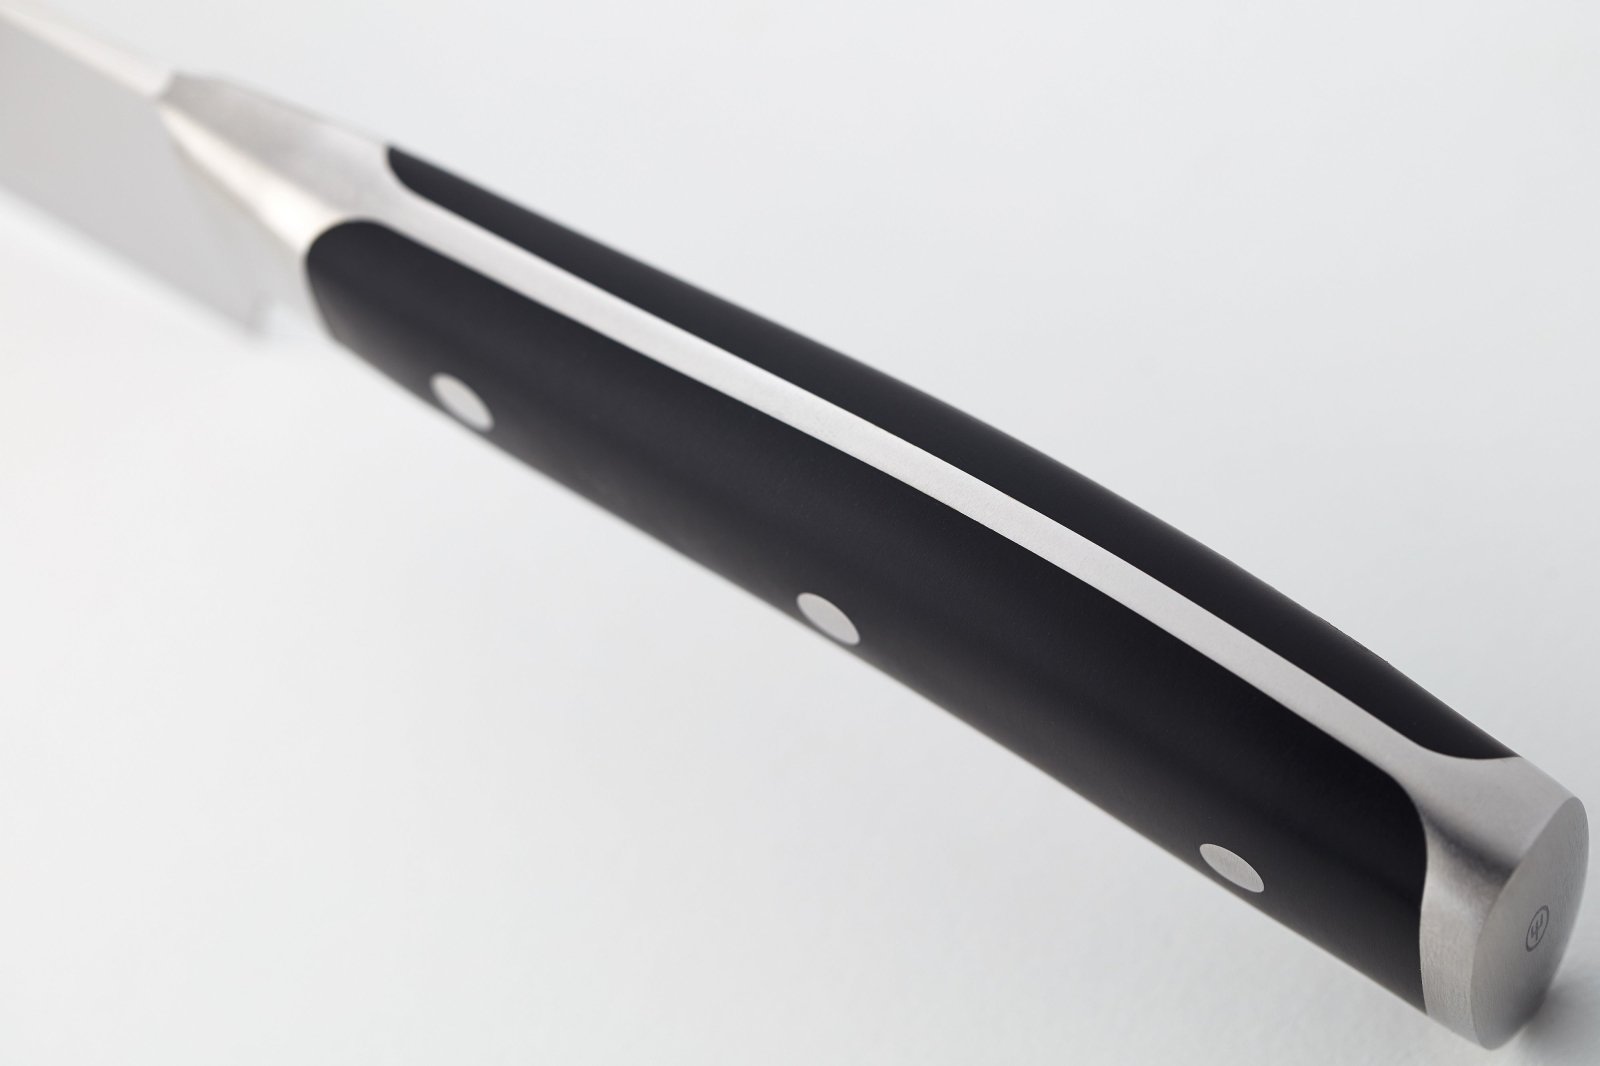 Wusthof Classic IKON 16cm Flexible Fillet Knife - WT1040333716 - The Cotswold Knife Company